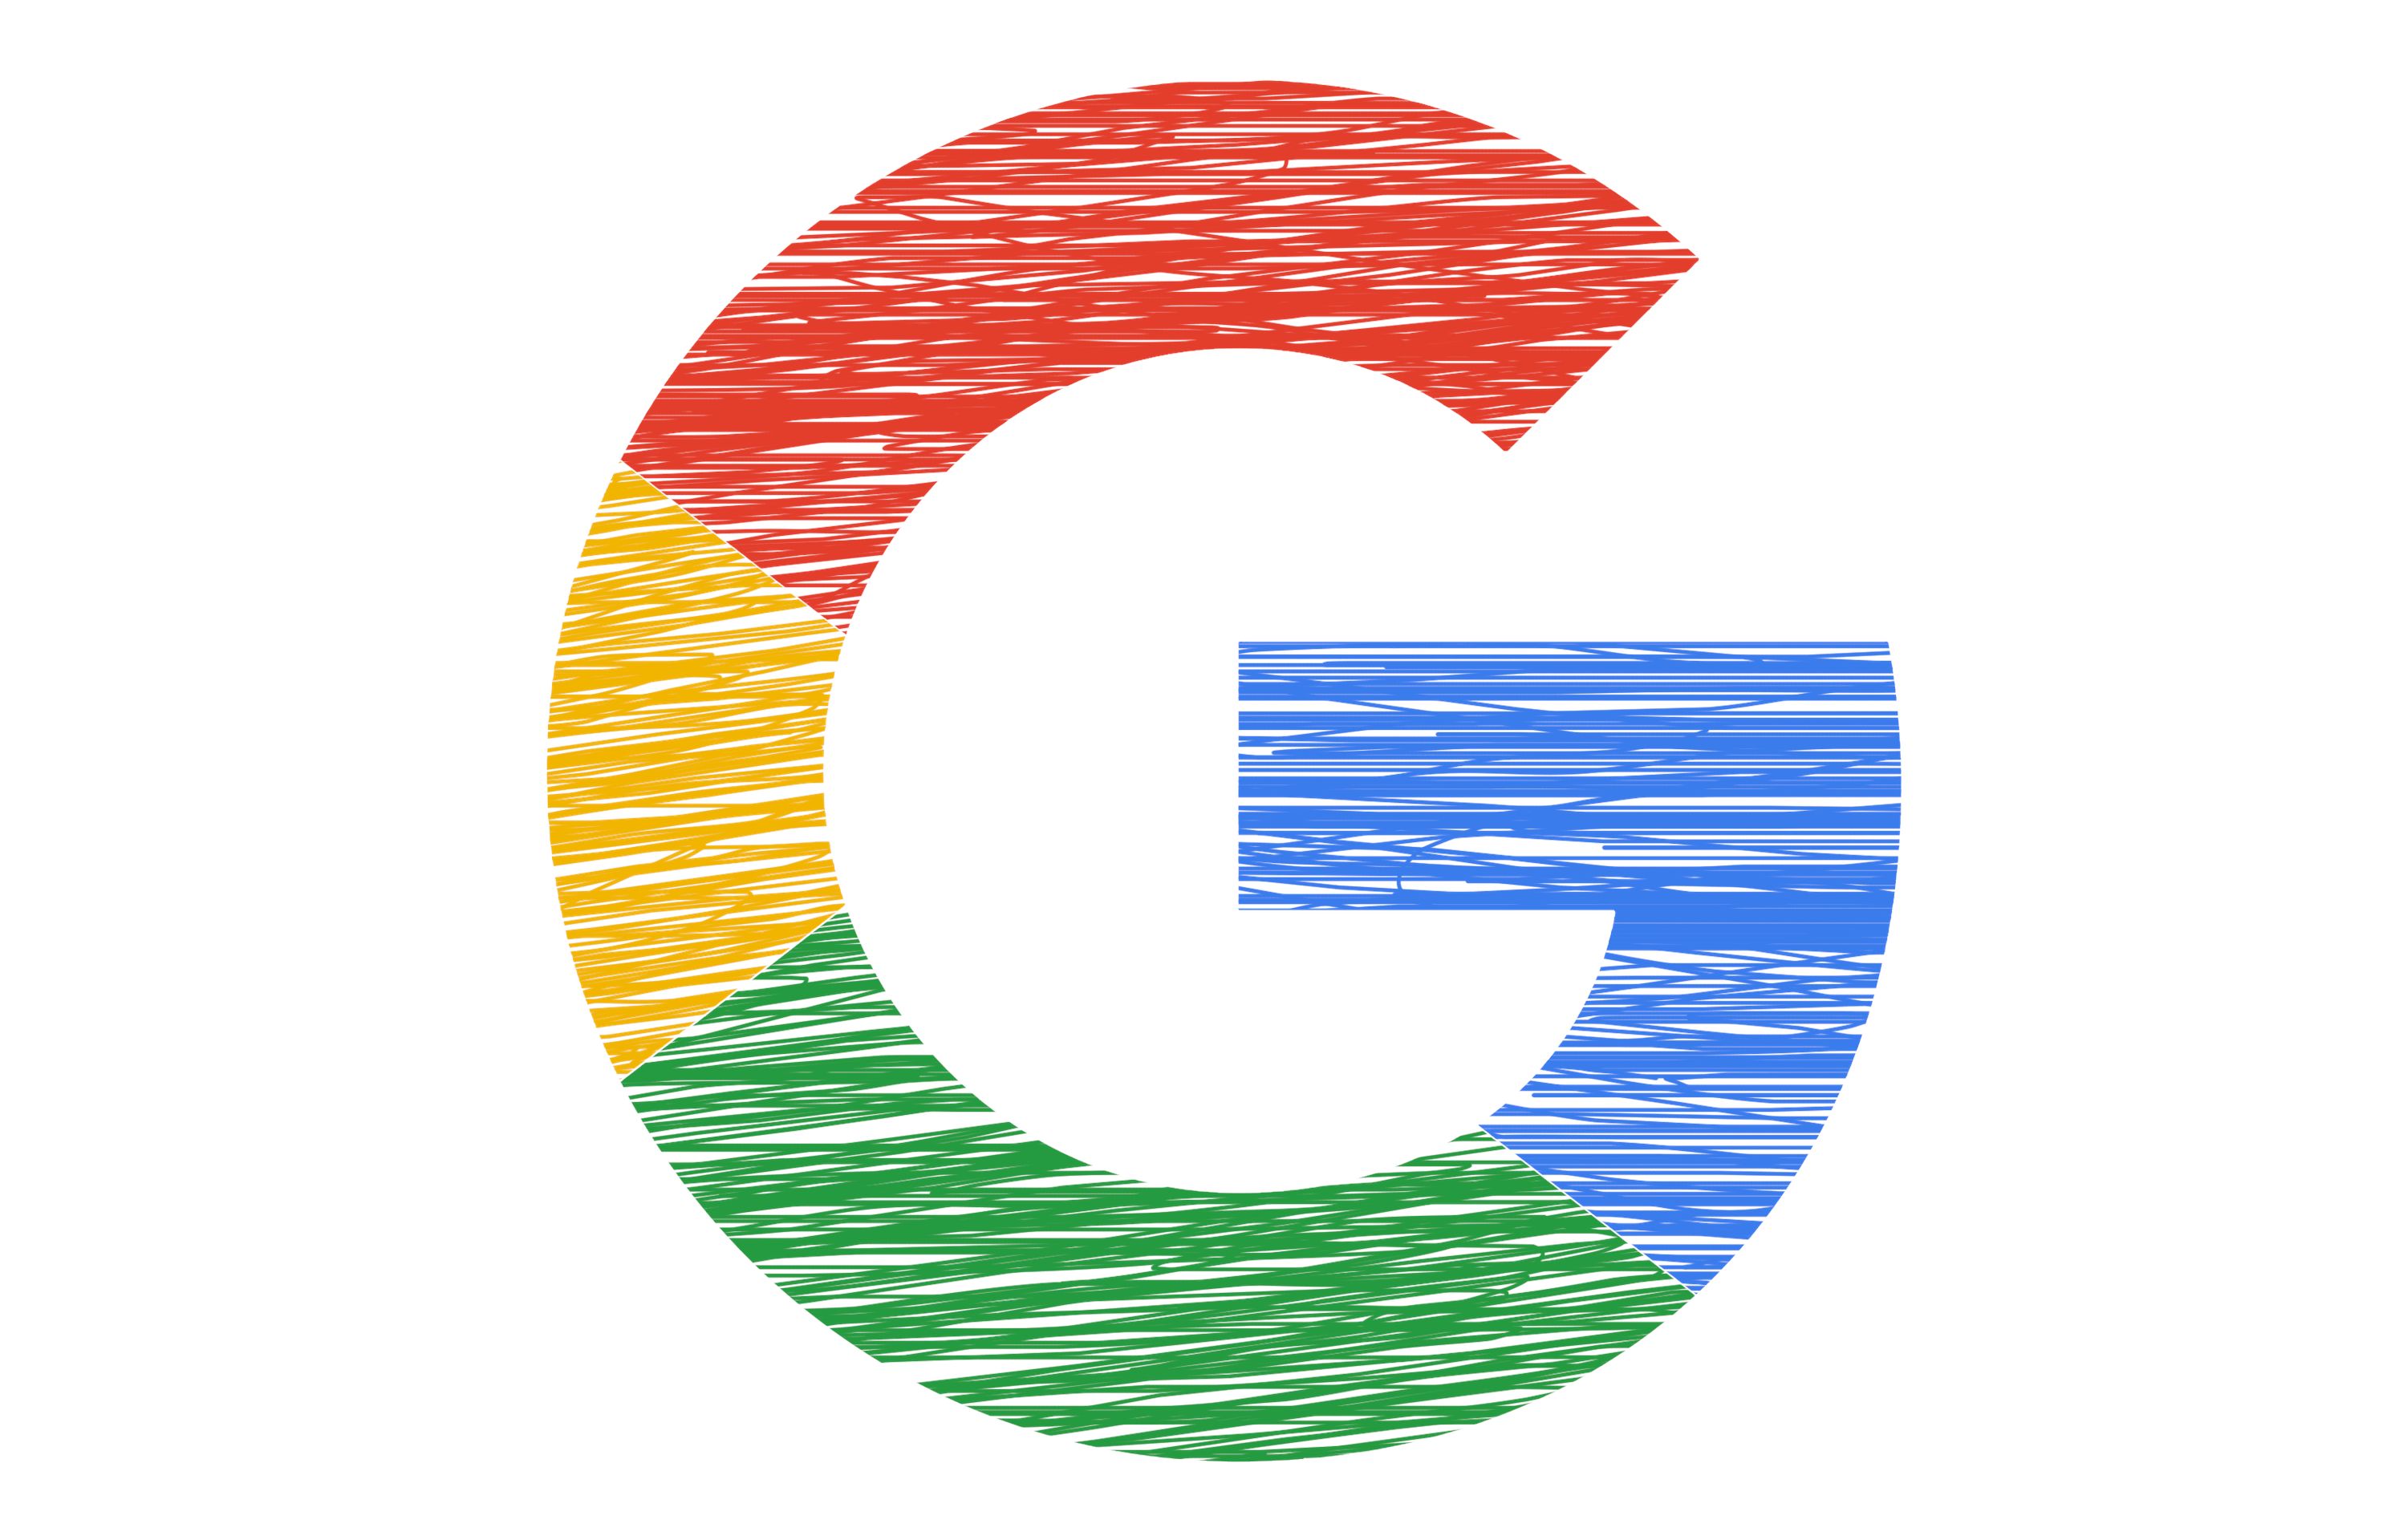 Baixar papel de parede para celular de Google, Tecnologia, Logotipo gratuito.